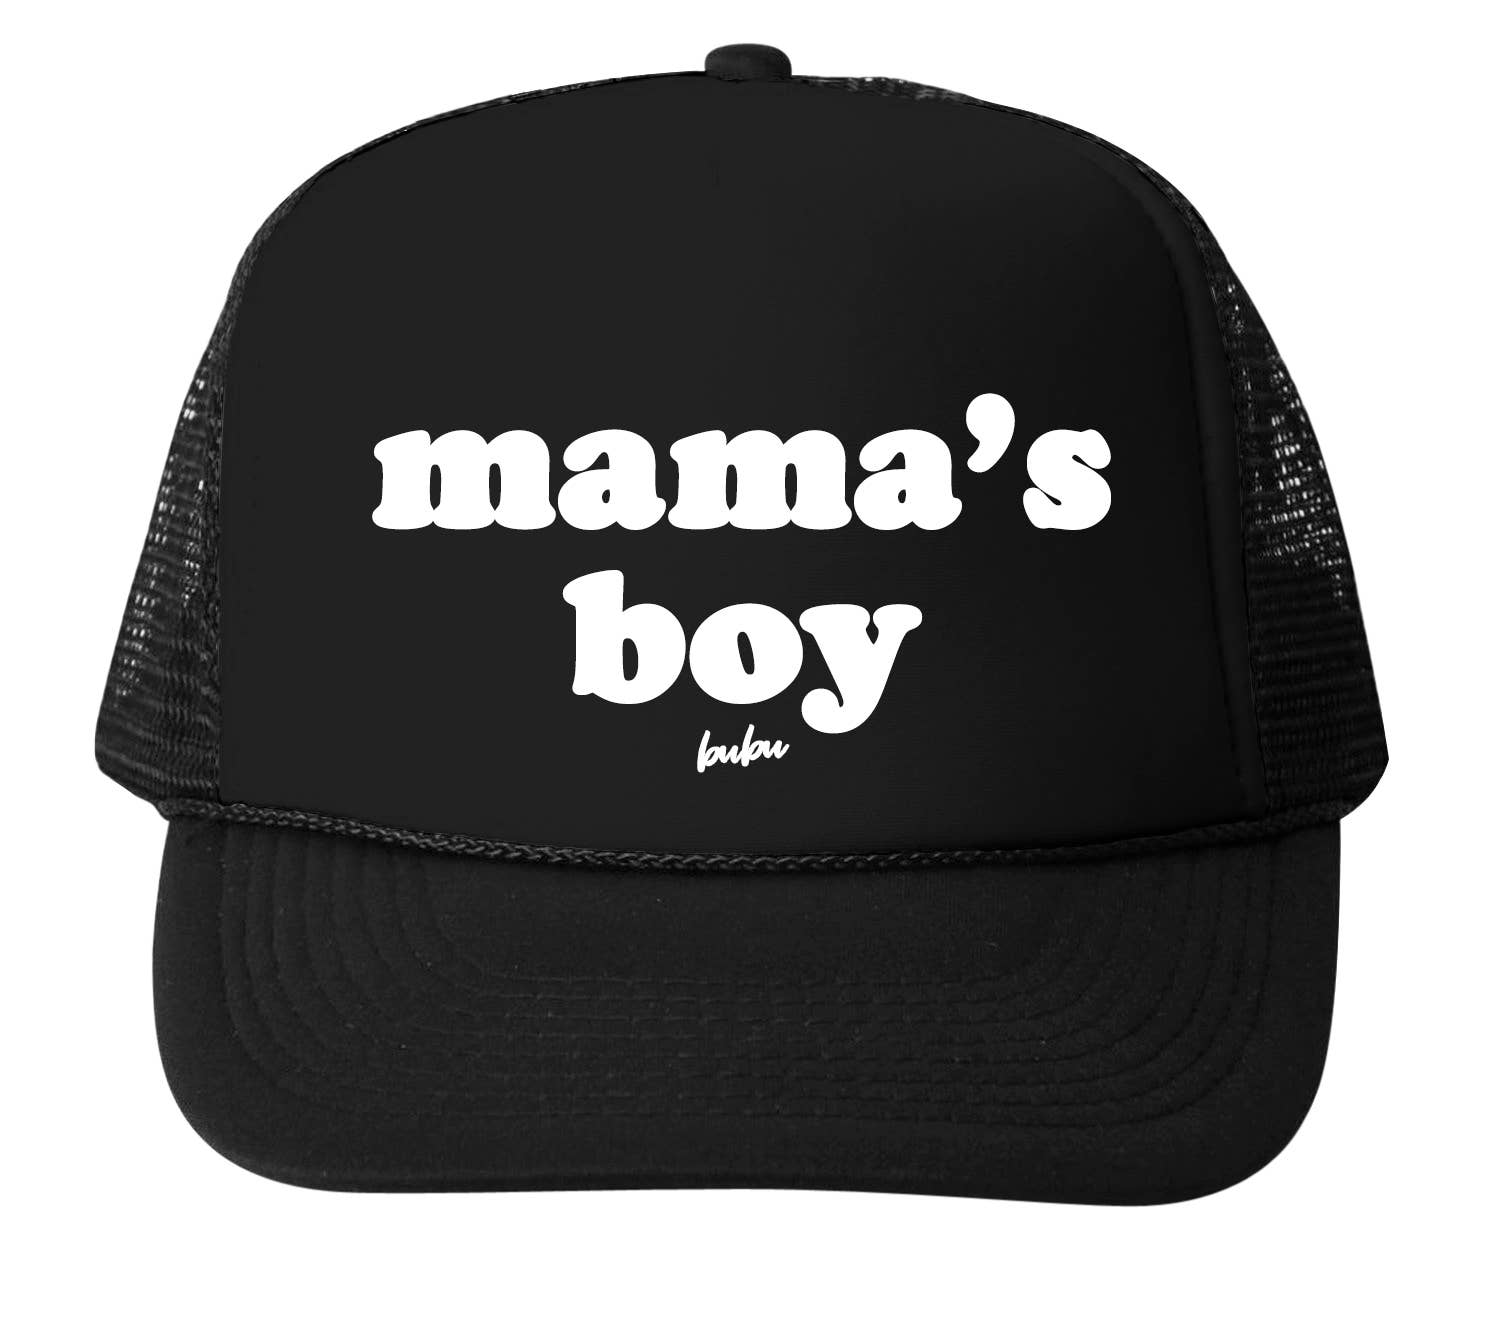 Mama's Boy Trucker Hat - Black/White Tea for Three: A Children's Boutique